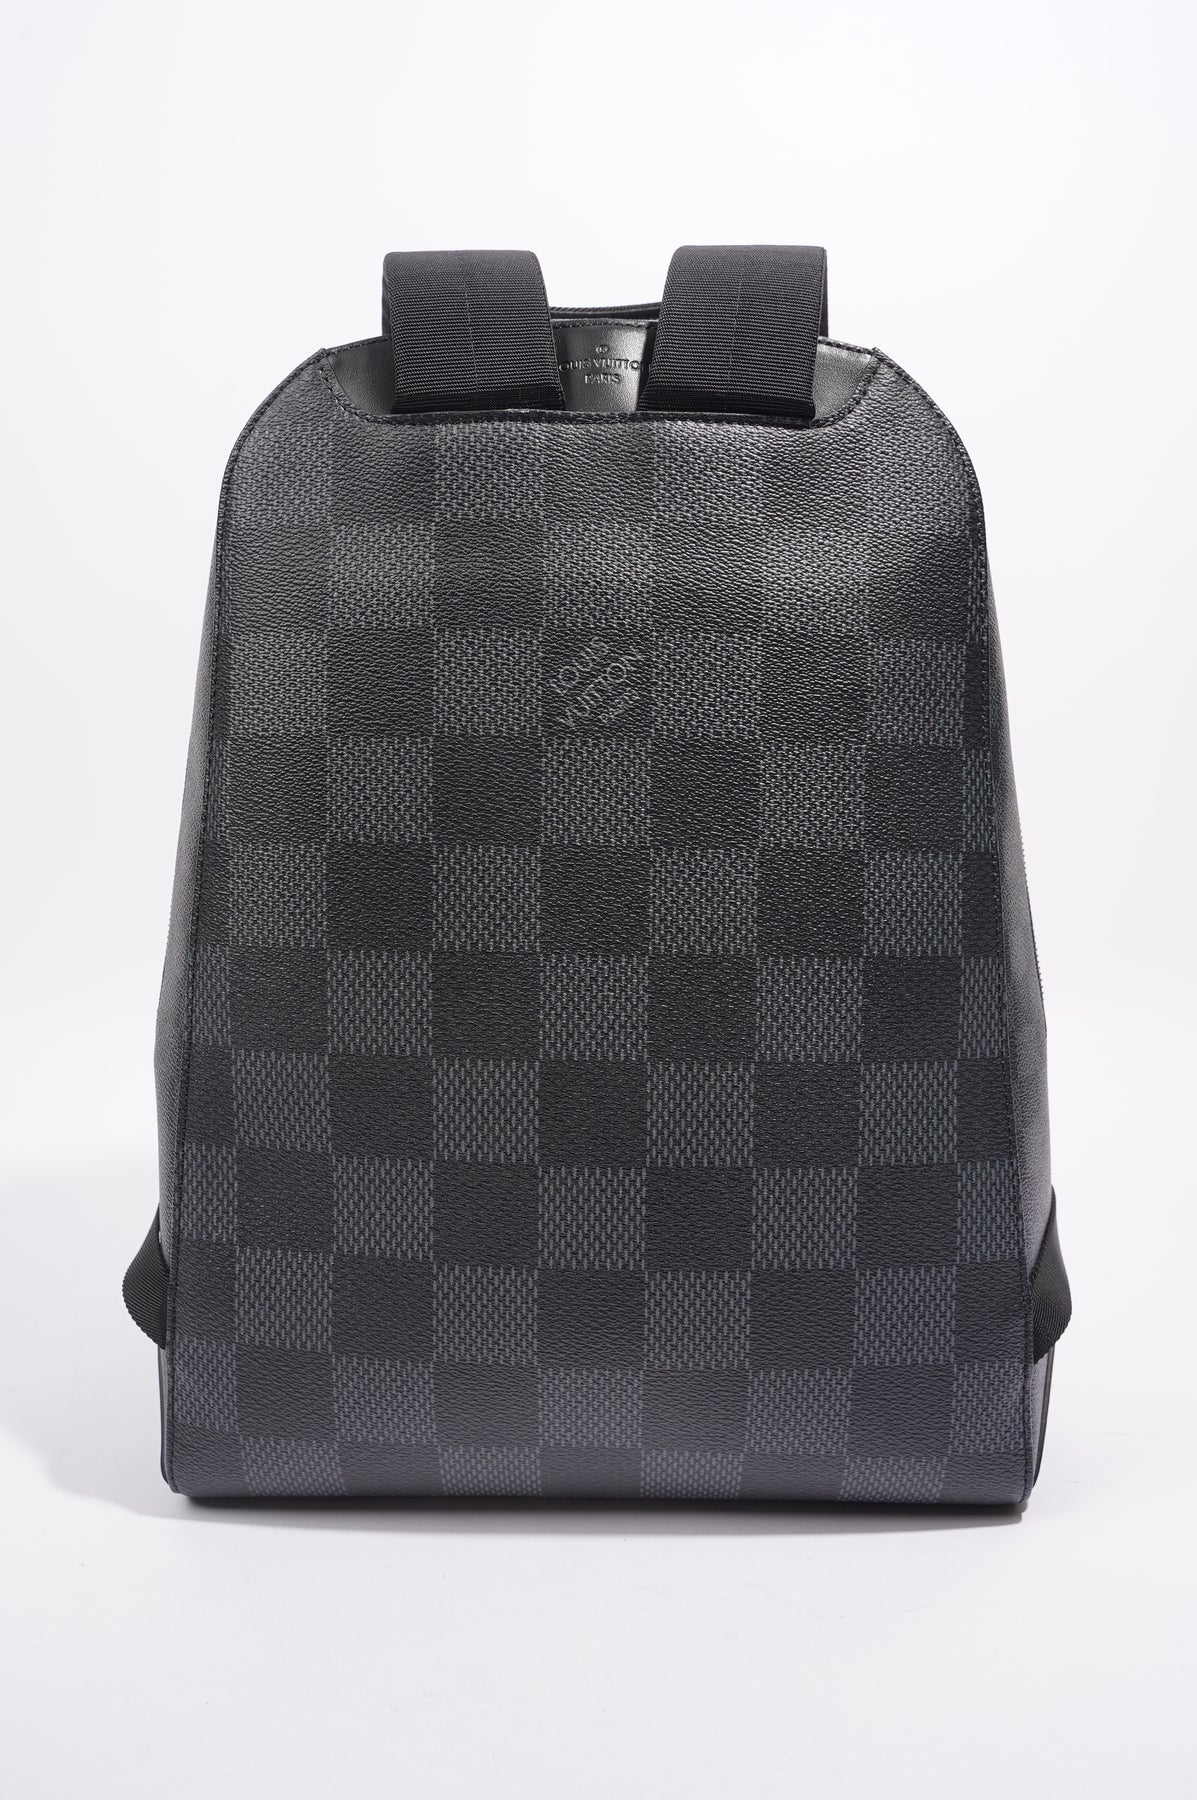 Shop Louis Vuitton Campus backpack (N50009) by design◇base